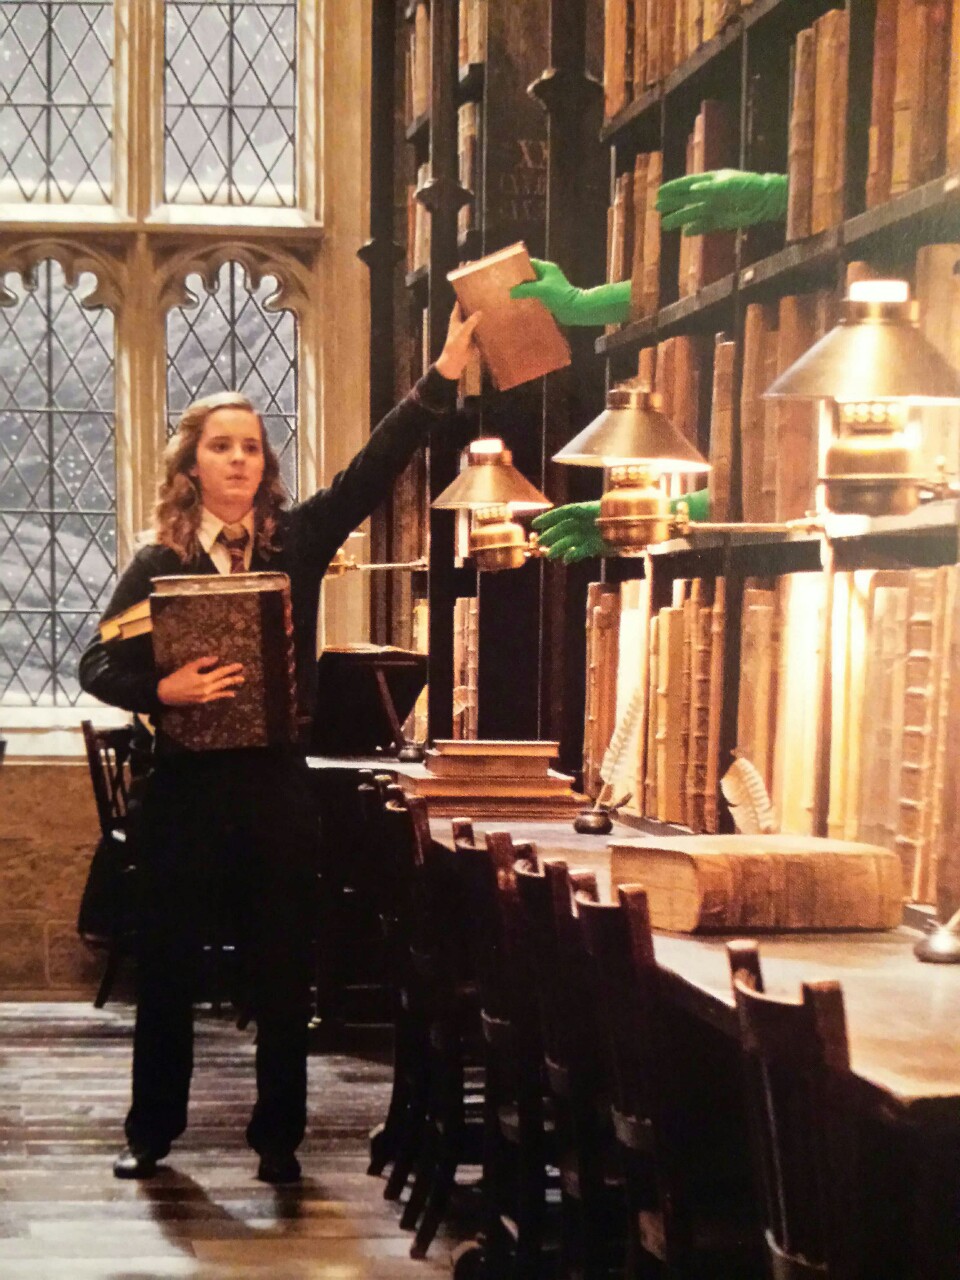 Hogwarts “magic”